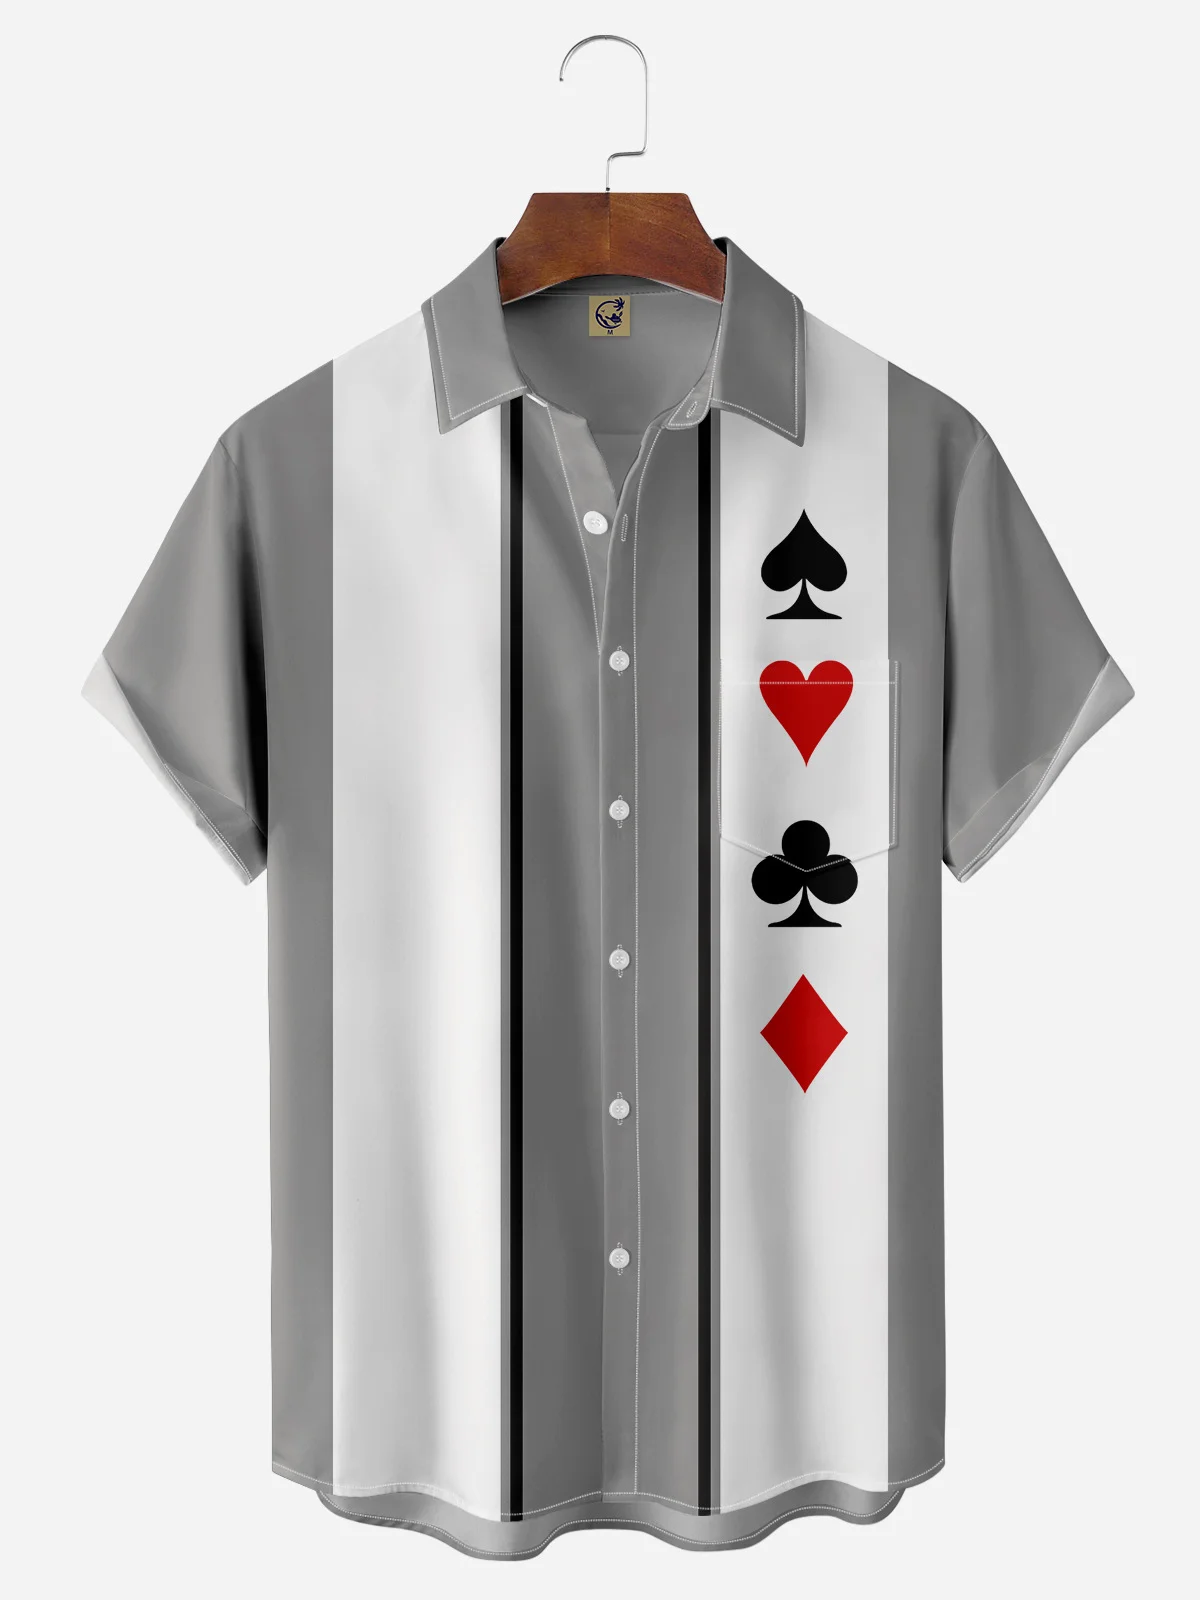 Hardaddy Poker Symbols Chest Pocket Short Sleeve Bowling Shirts